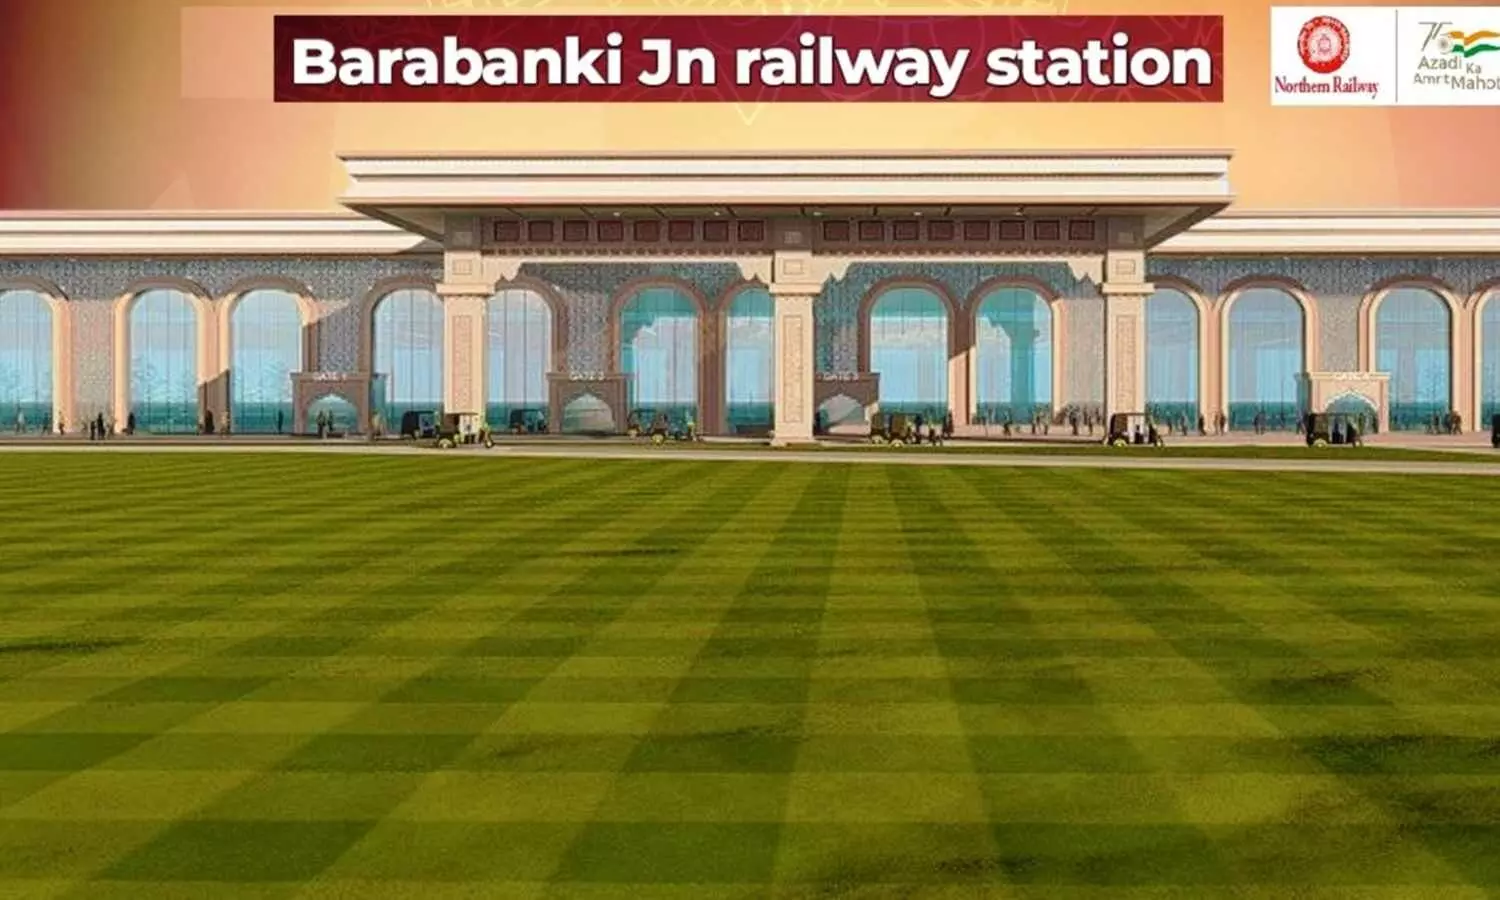 Barabanki Junction